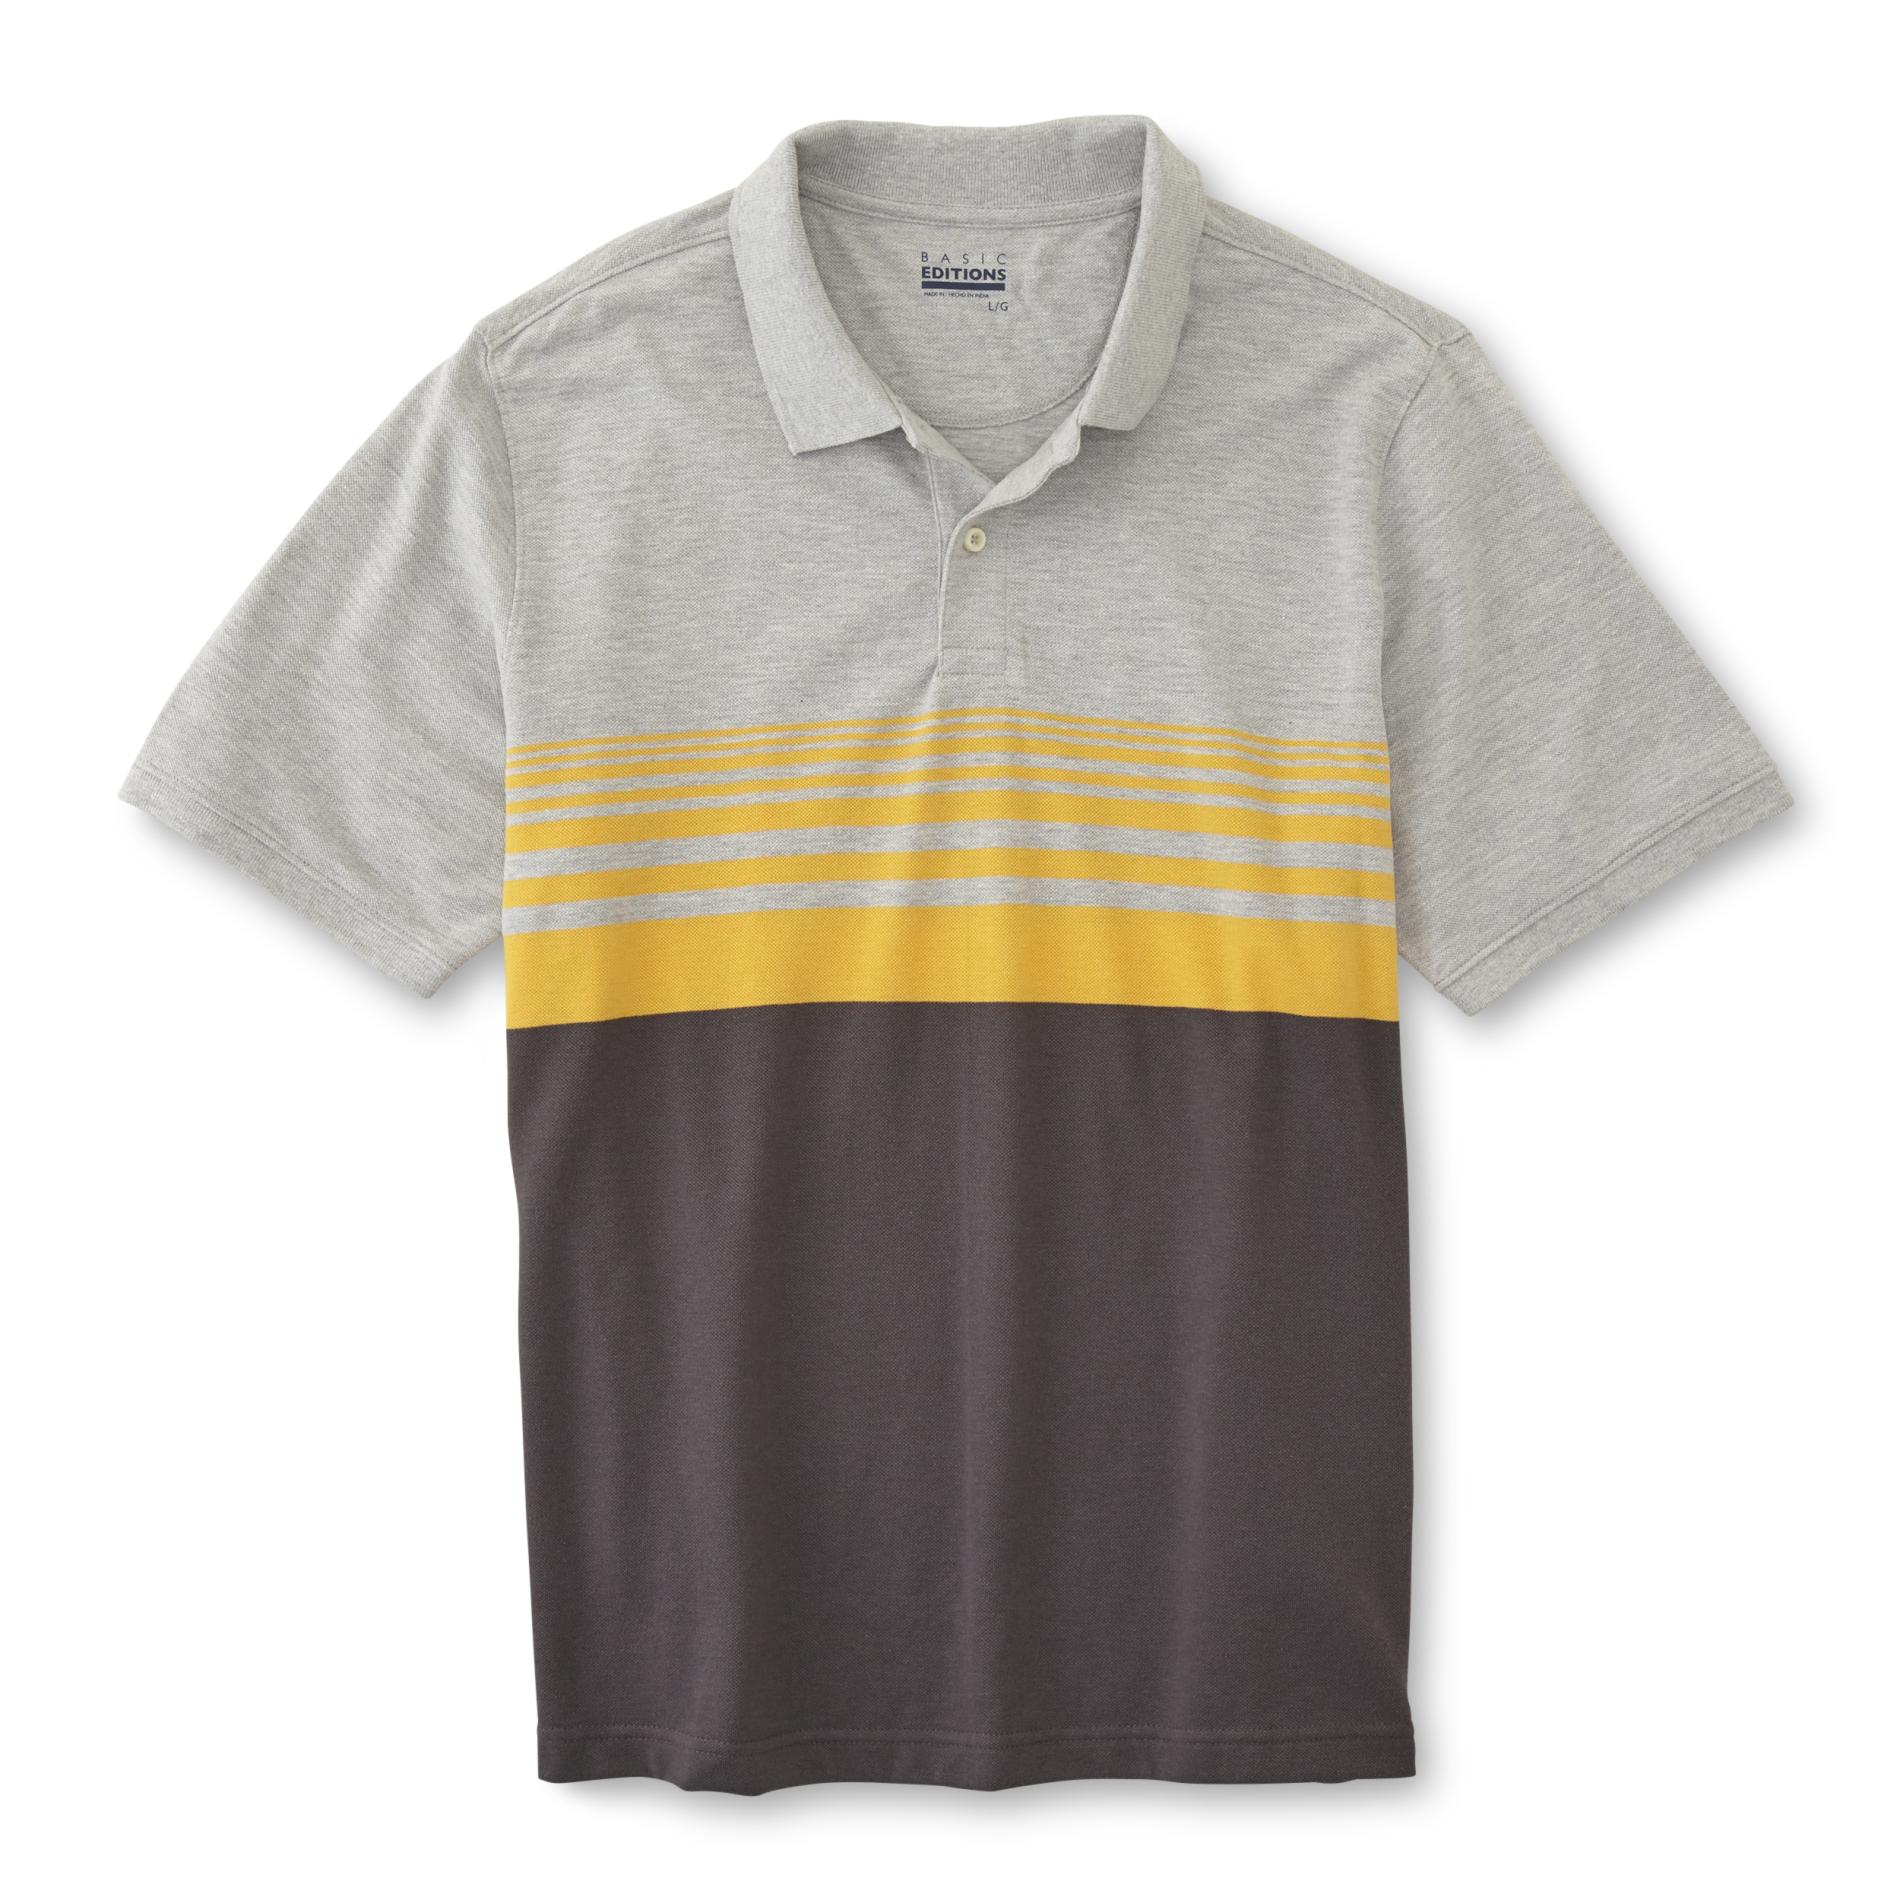 Basic Editions Men's Big & Tall Polo Shirt - Colorblock